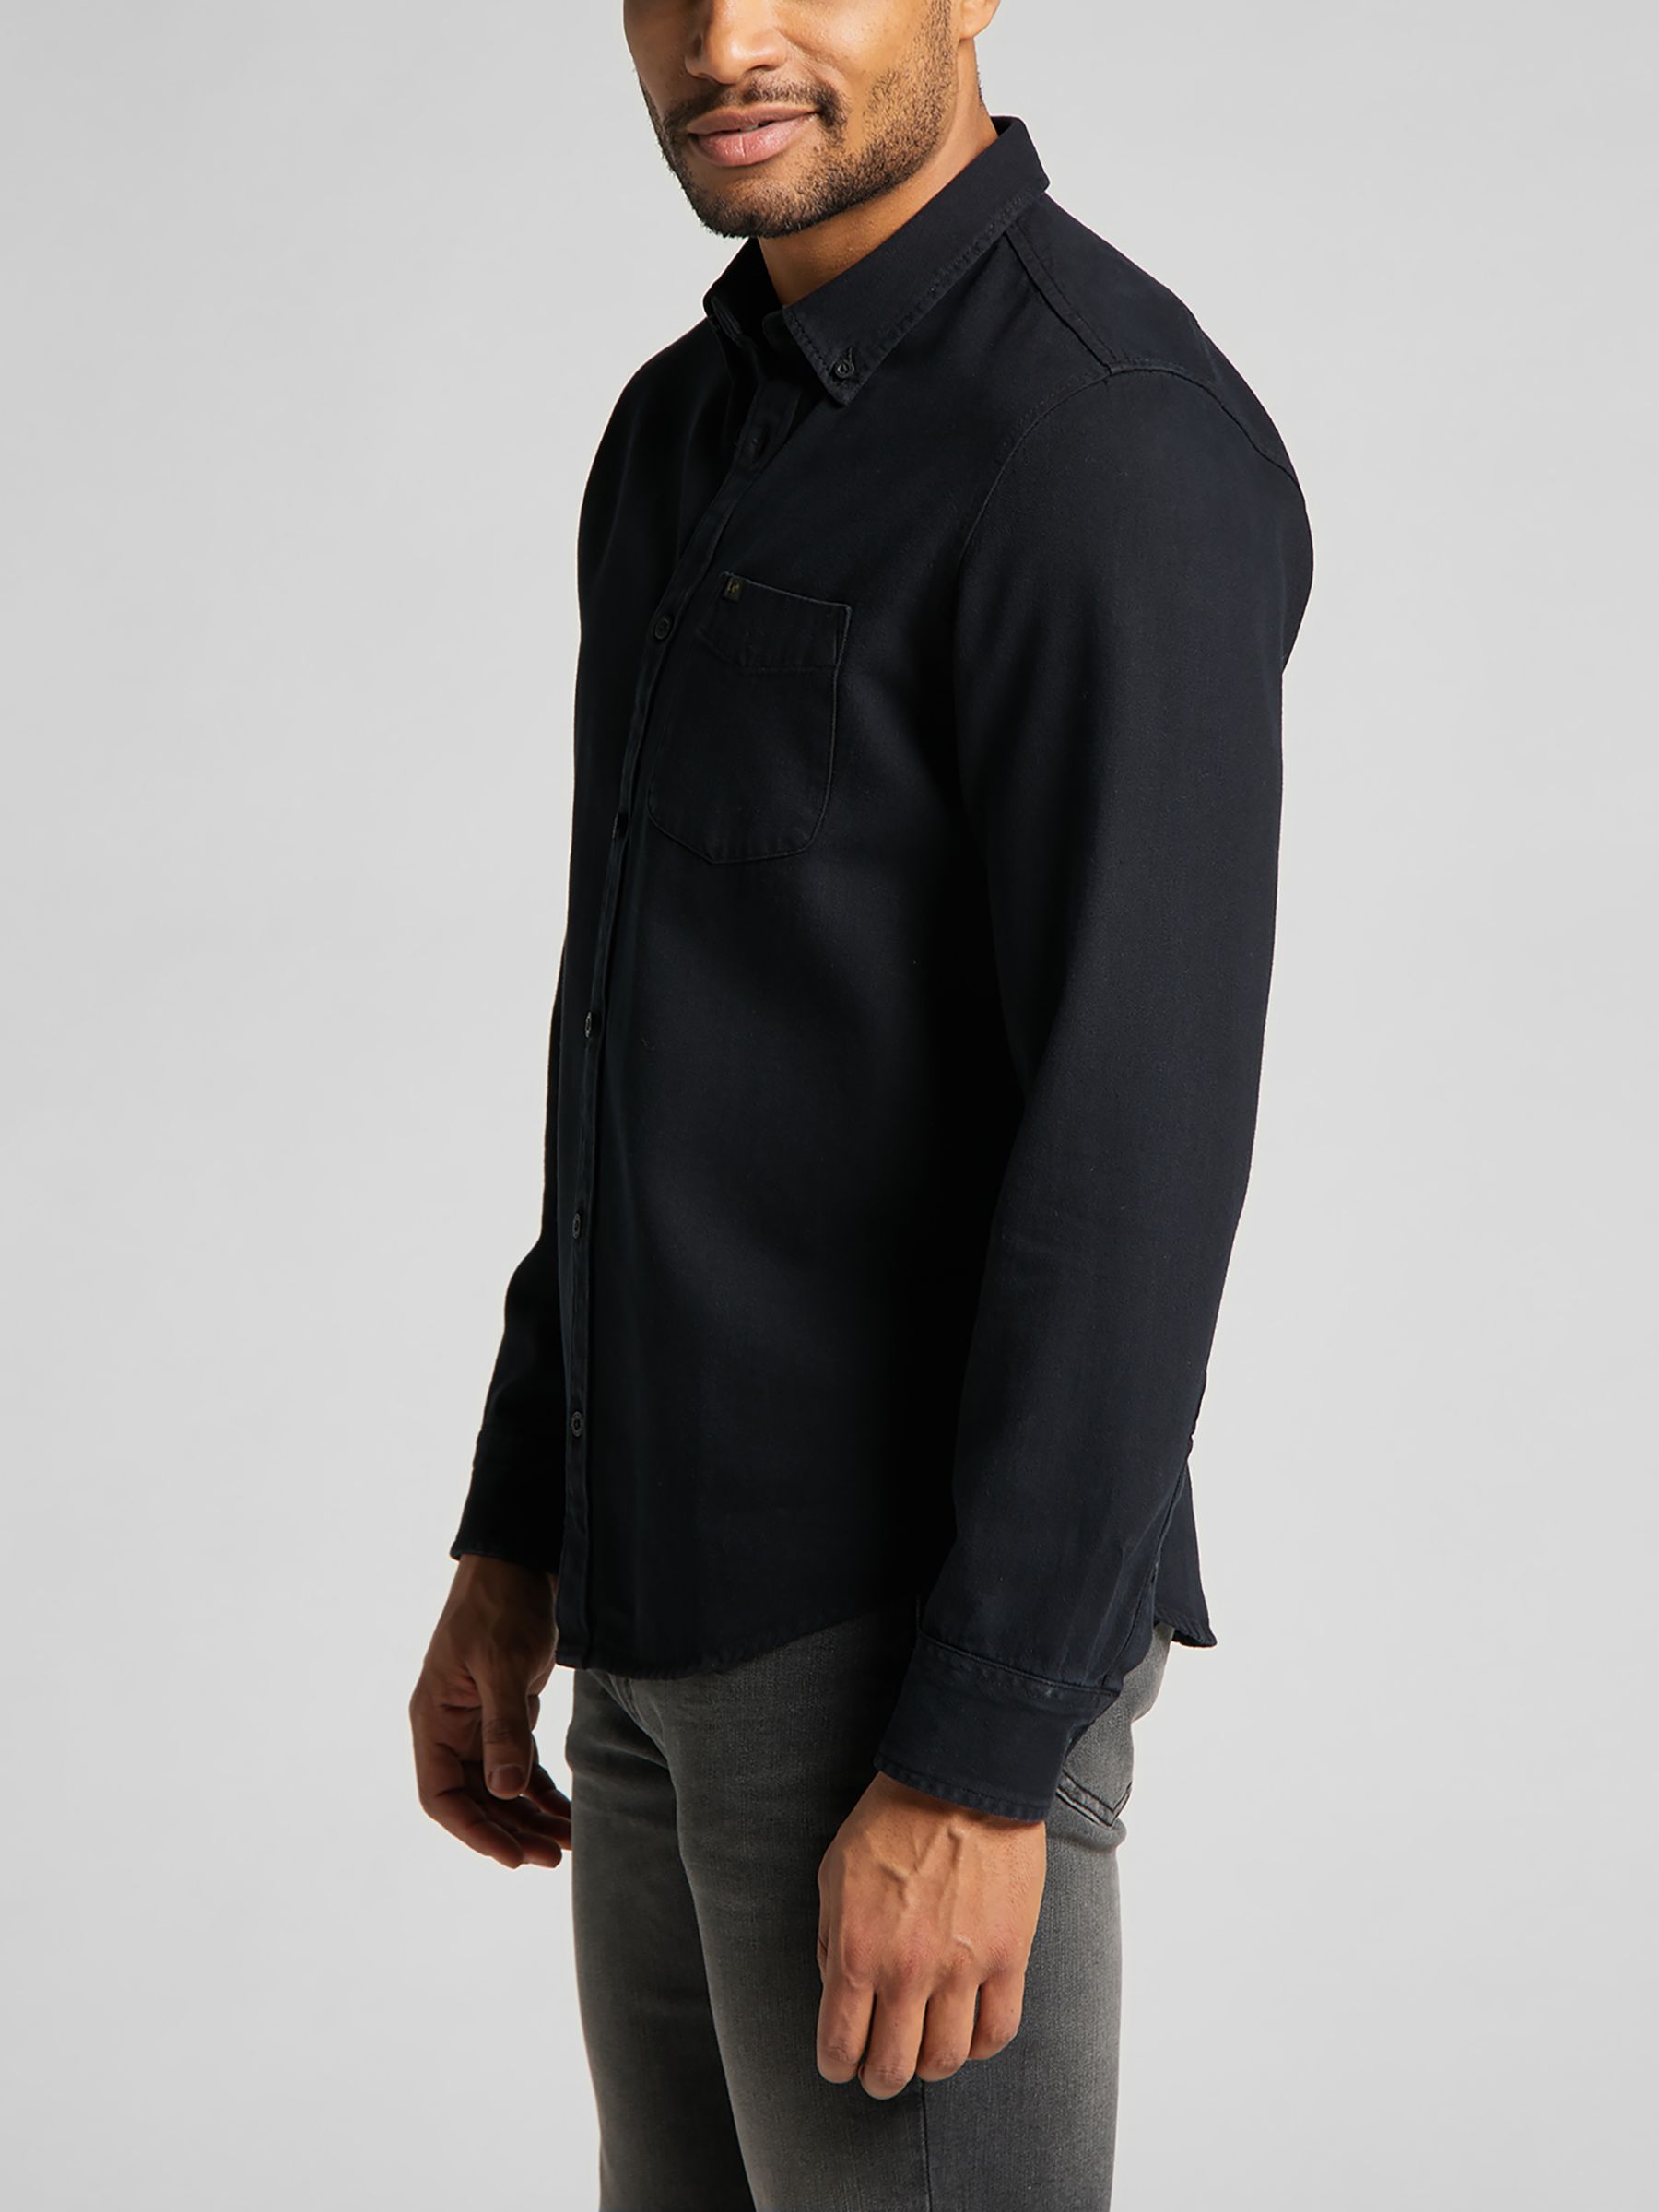 Lee Cotton Regular Fit Shirt, Black, S